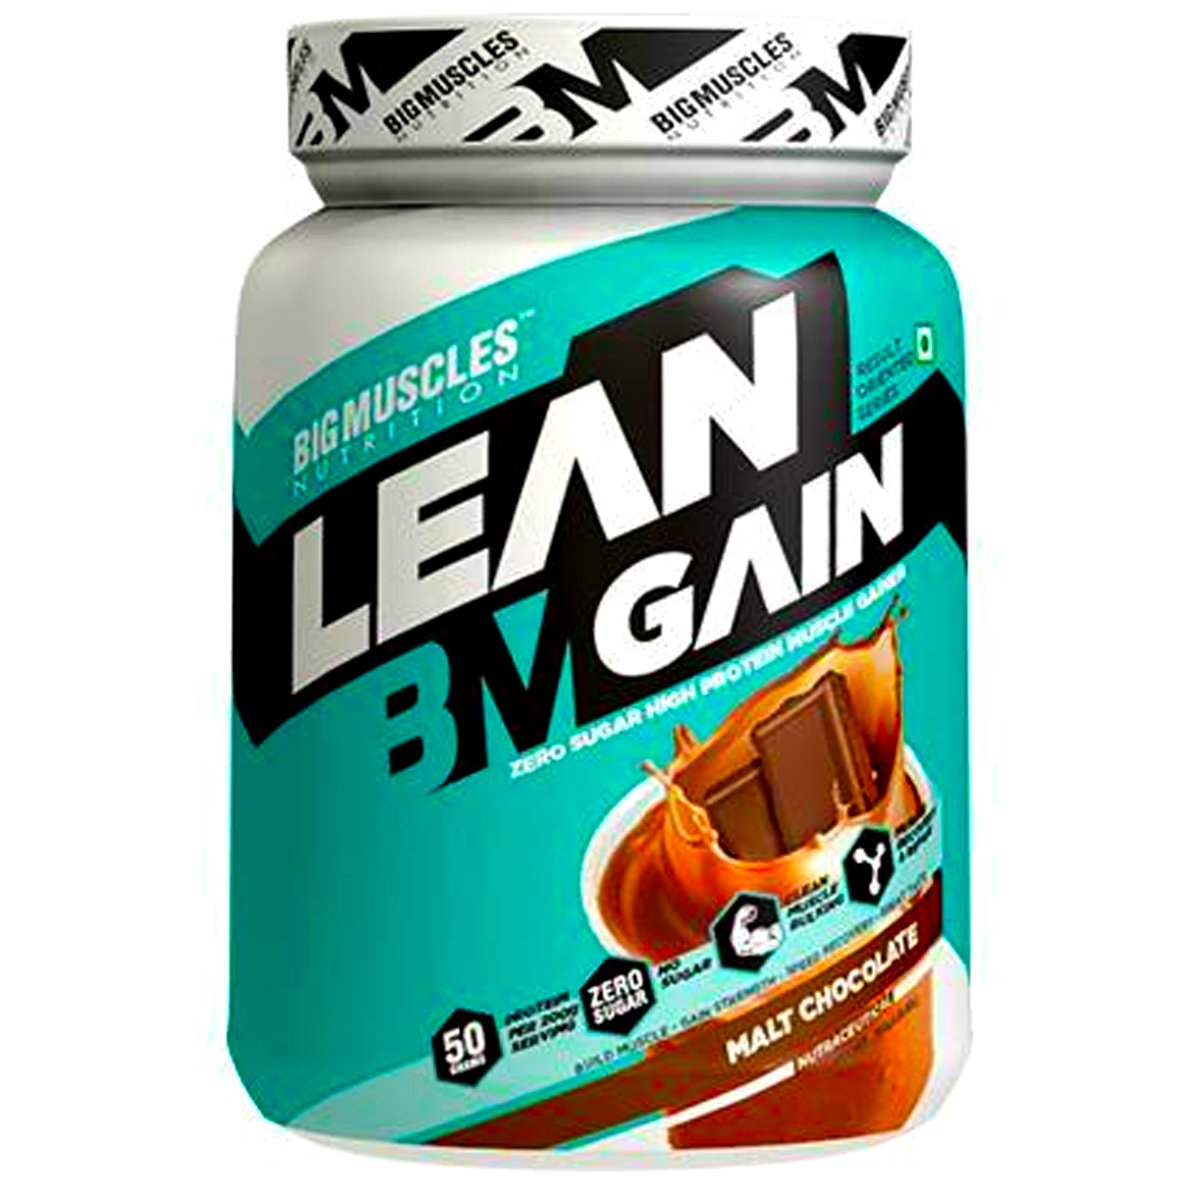 BIG MUSCLES Lean Gain + Real BM Vitamin ( free )